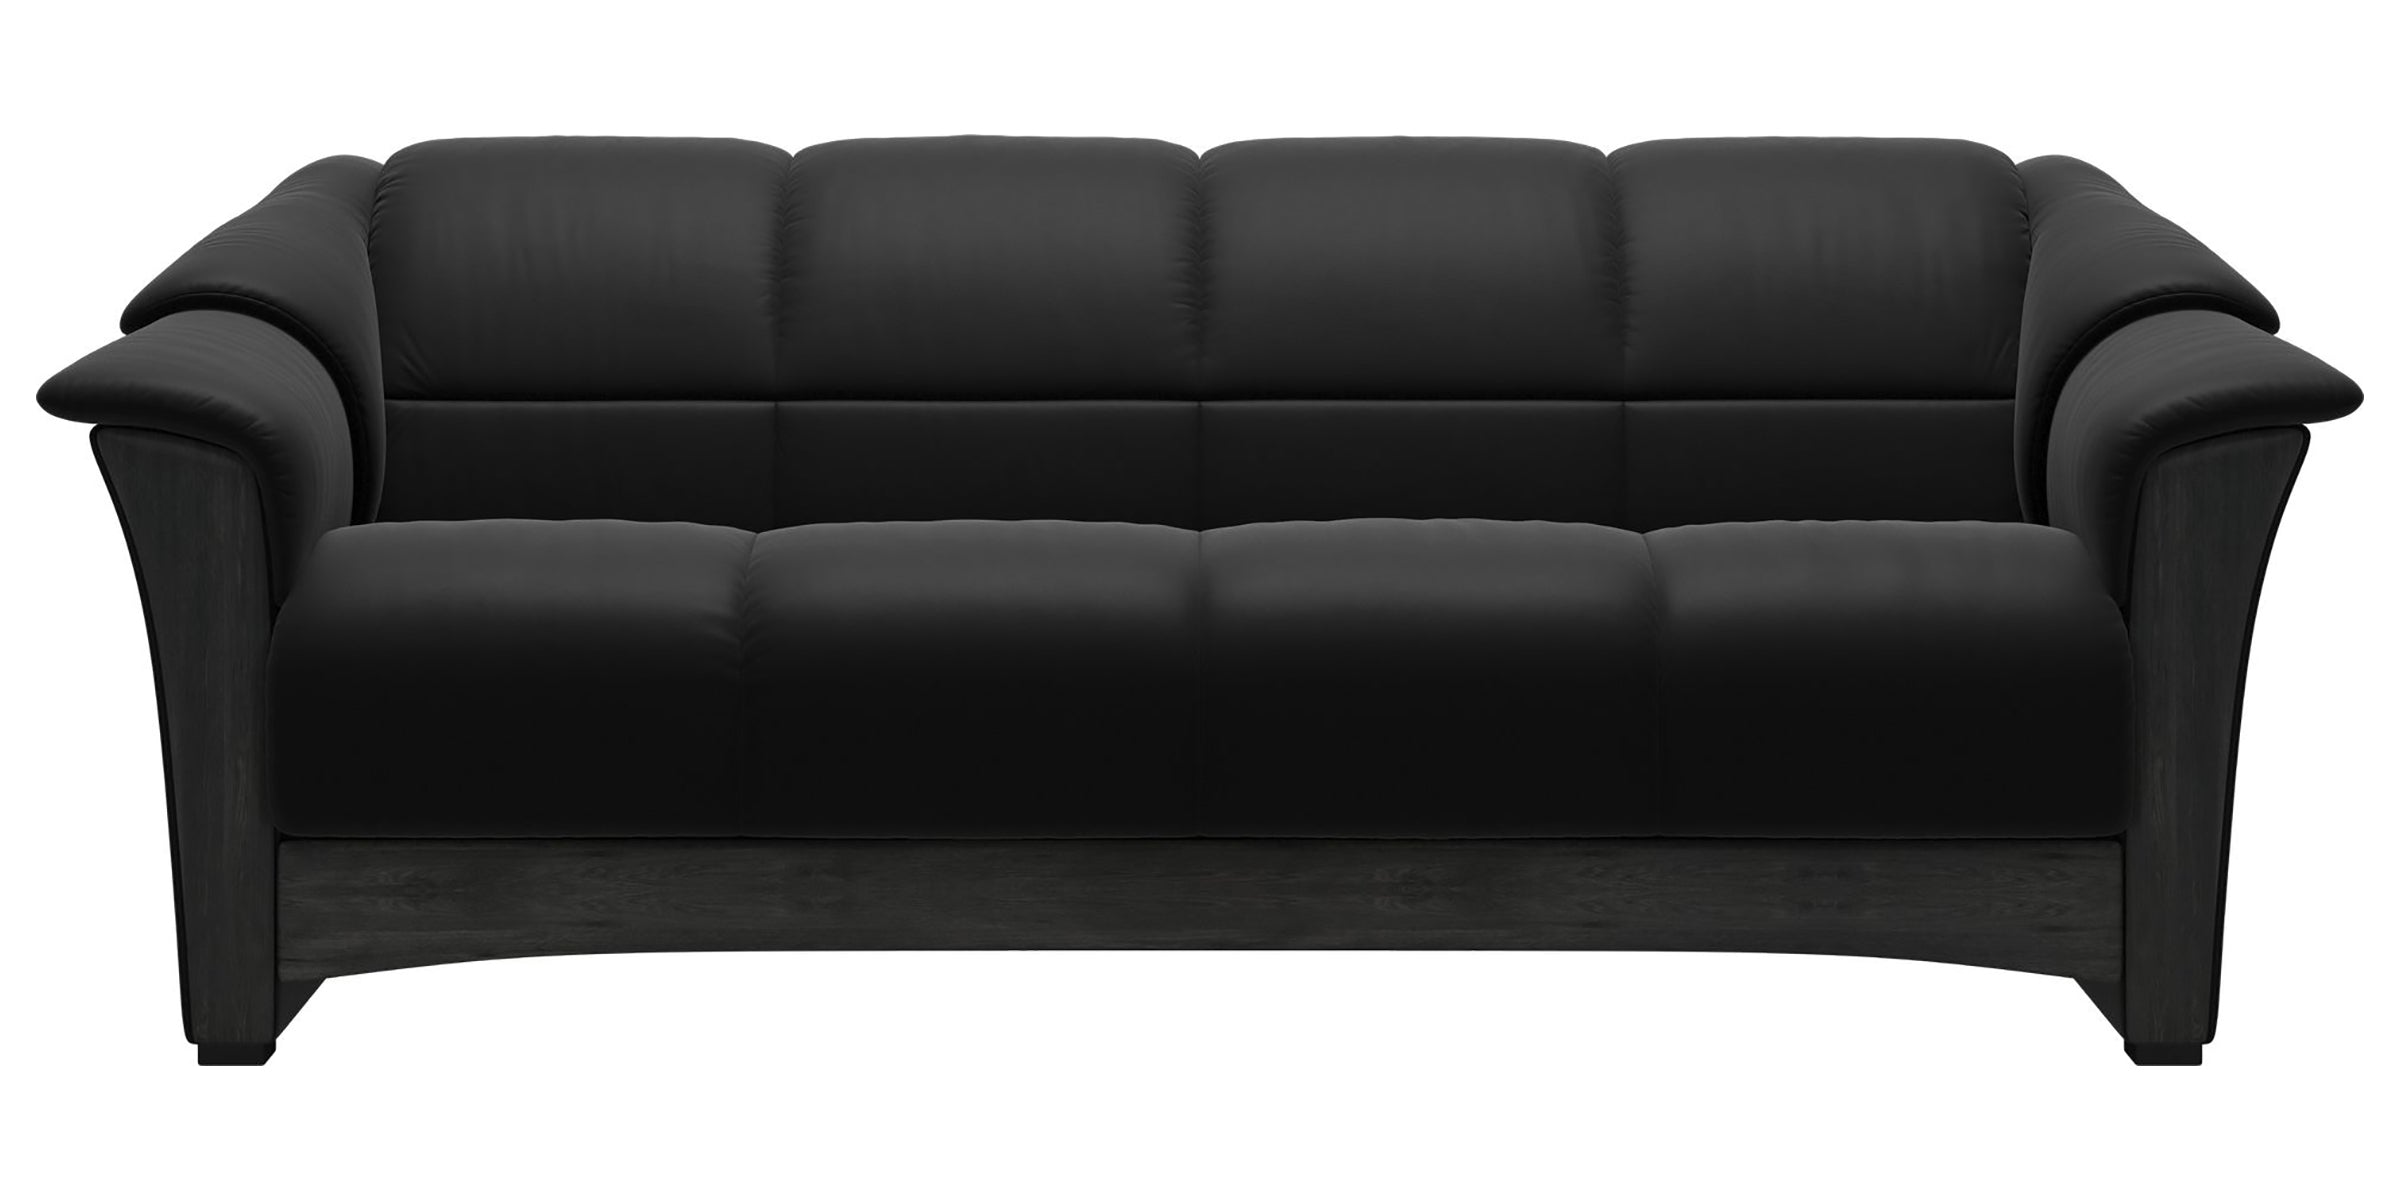 Paloma Leather Black and Grey Base | Stressless Oslo Sofa | Valley Ridge Furniture